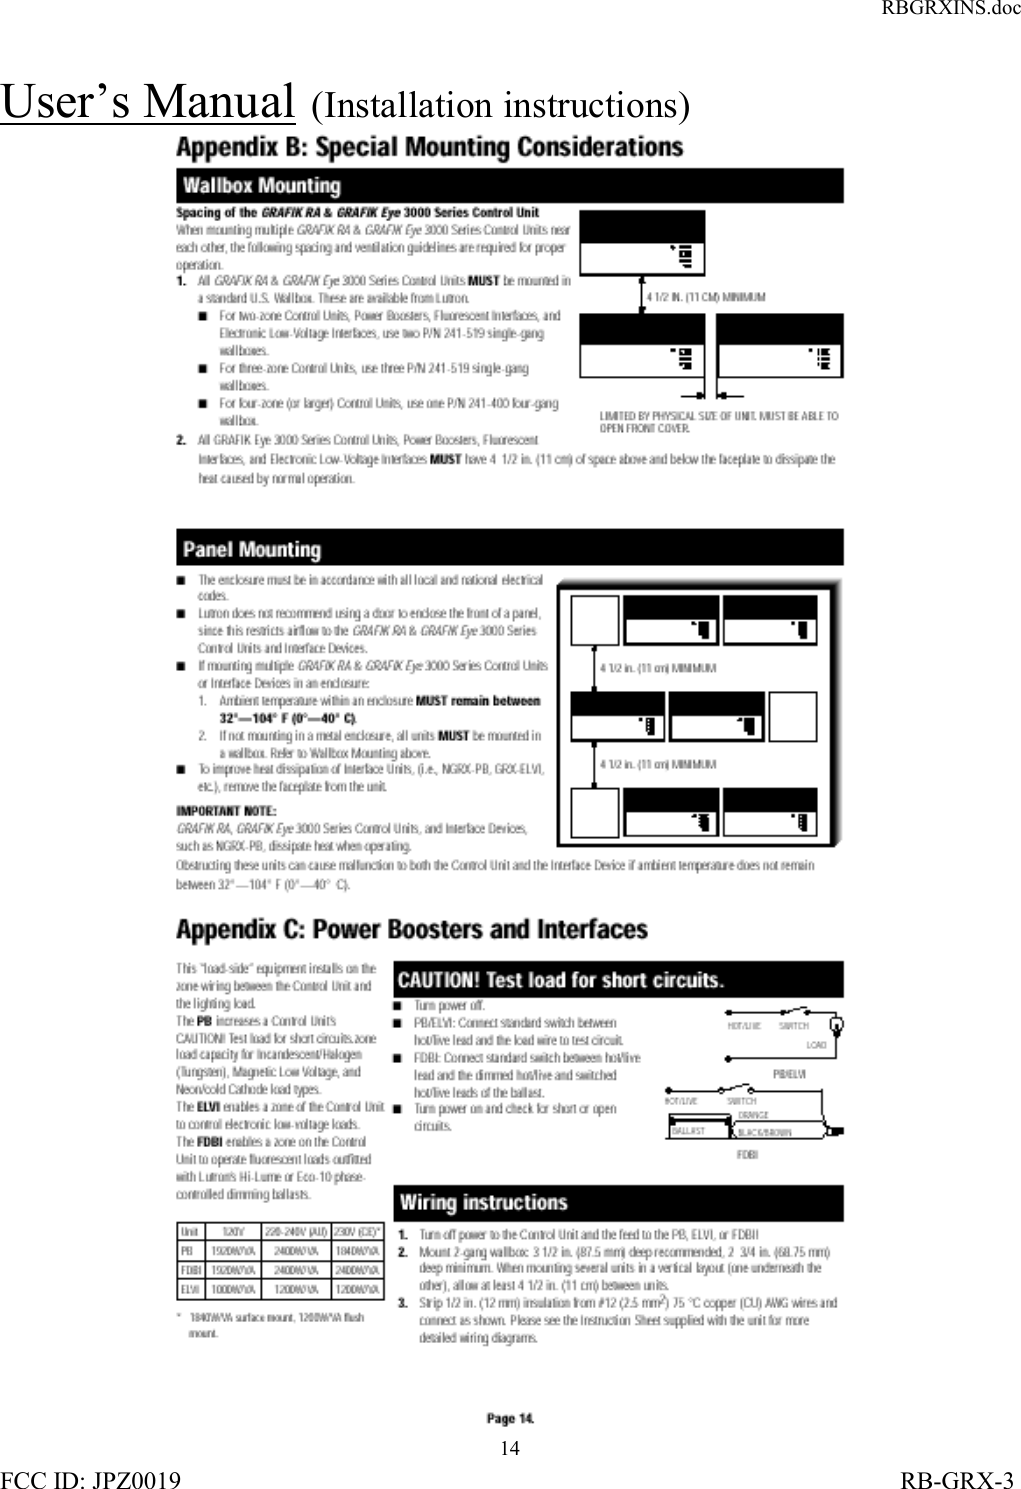 RBGRXINS.docFCC ID: JPZ0019                                                                                                                   RB-GRX-314User’s Manual  (Installation instructions)